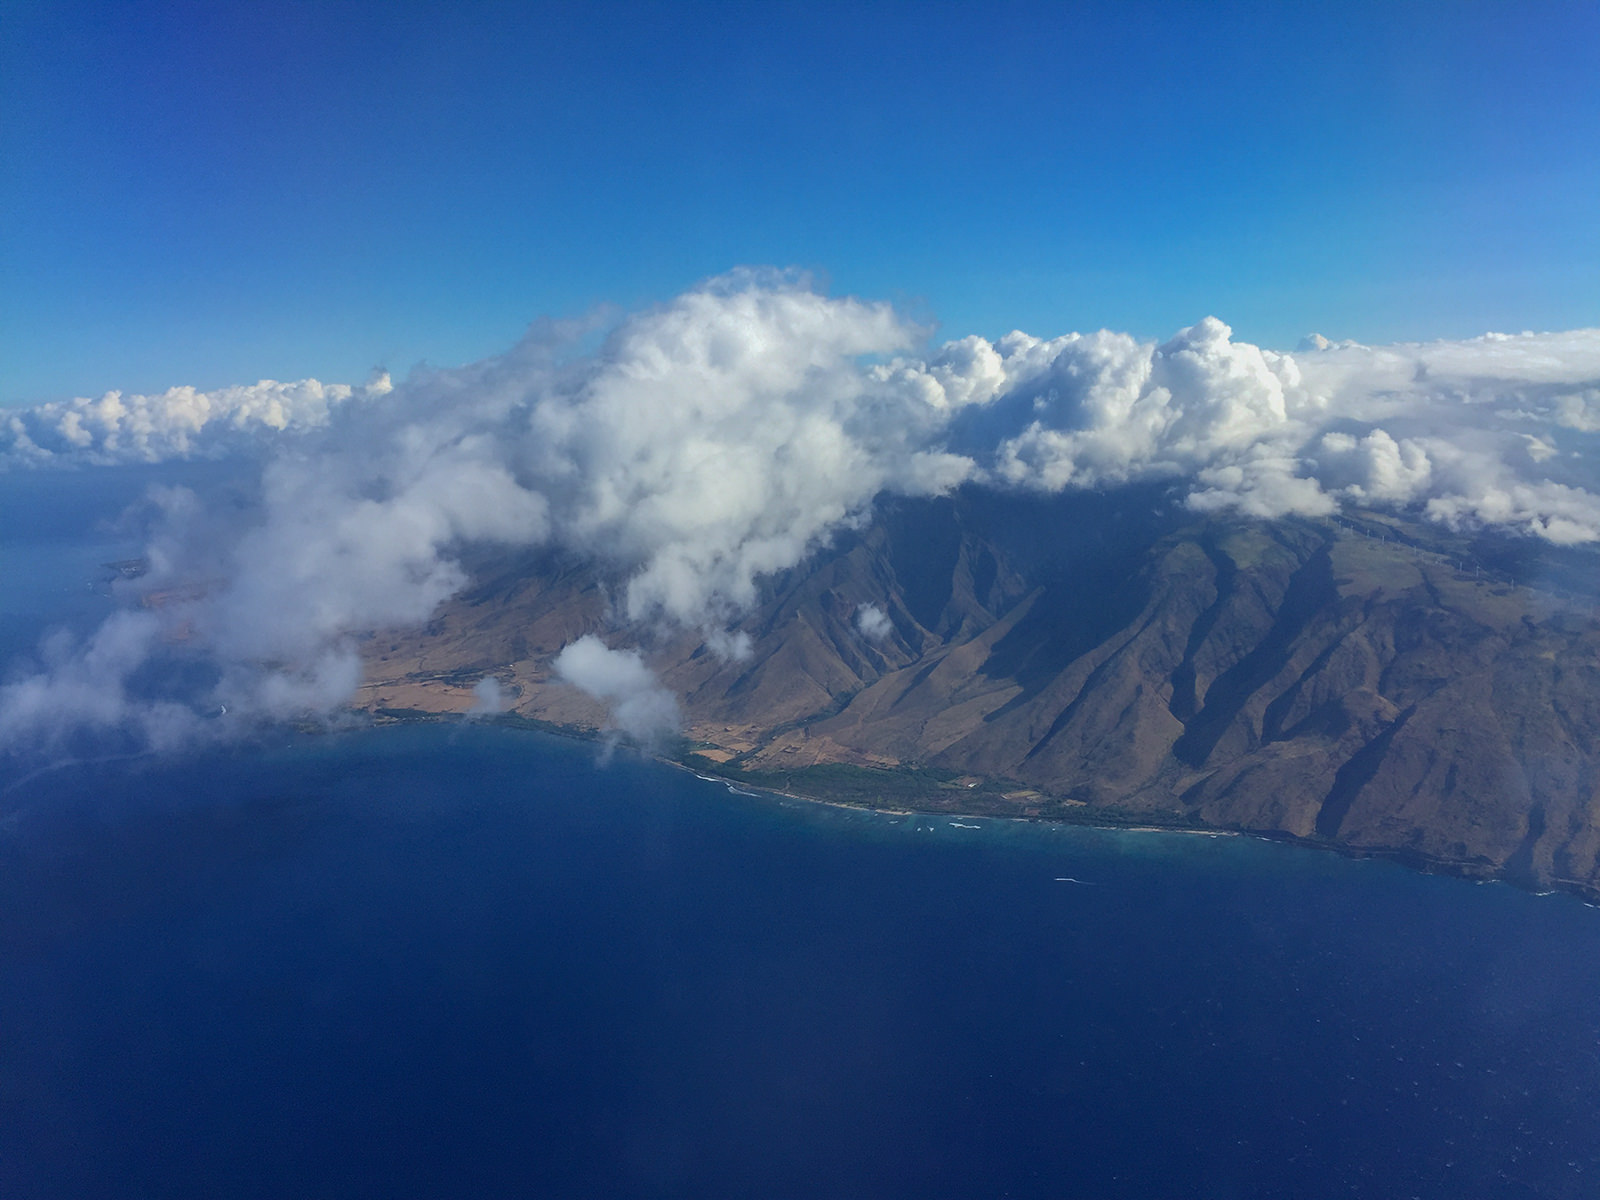 Bird's eye view of Maui coastline